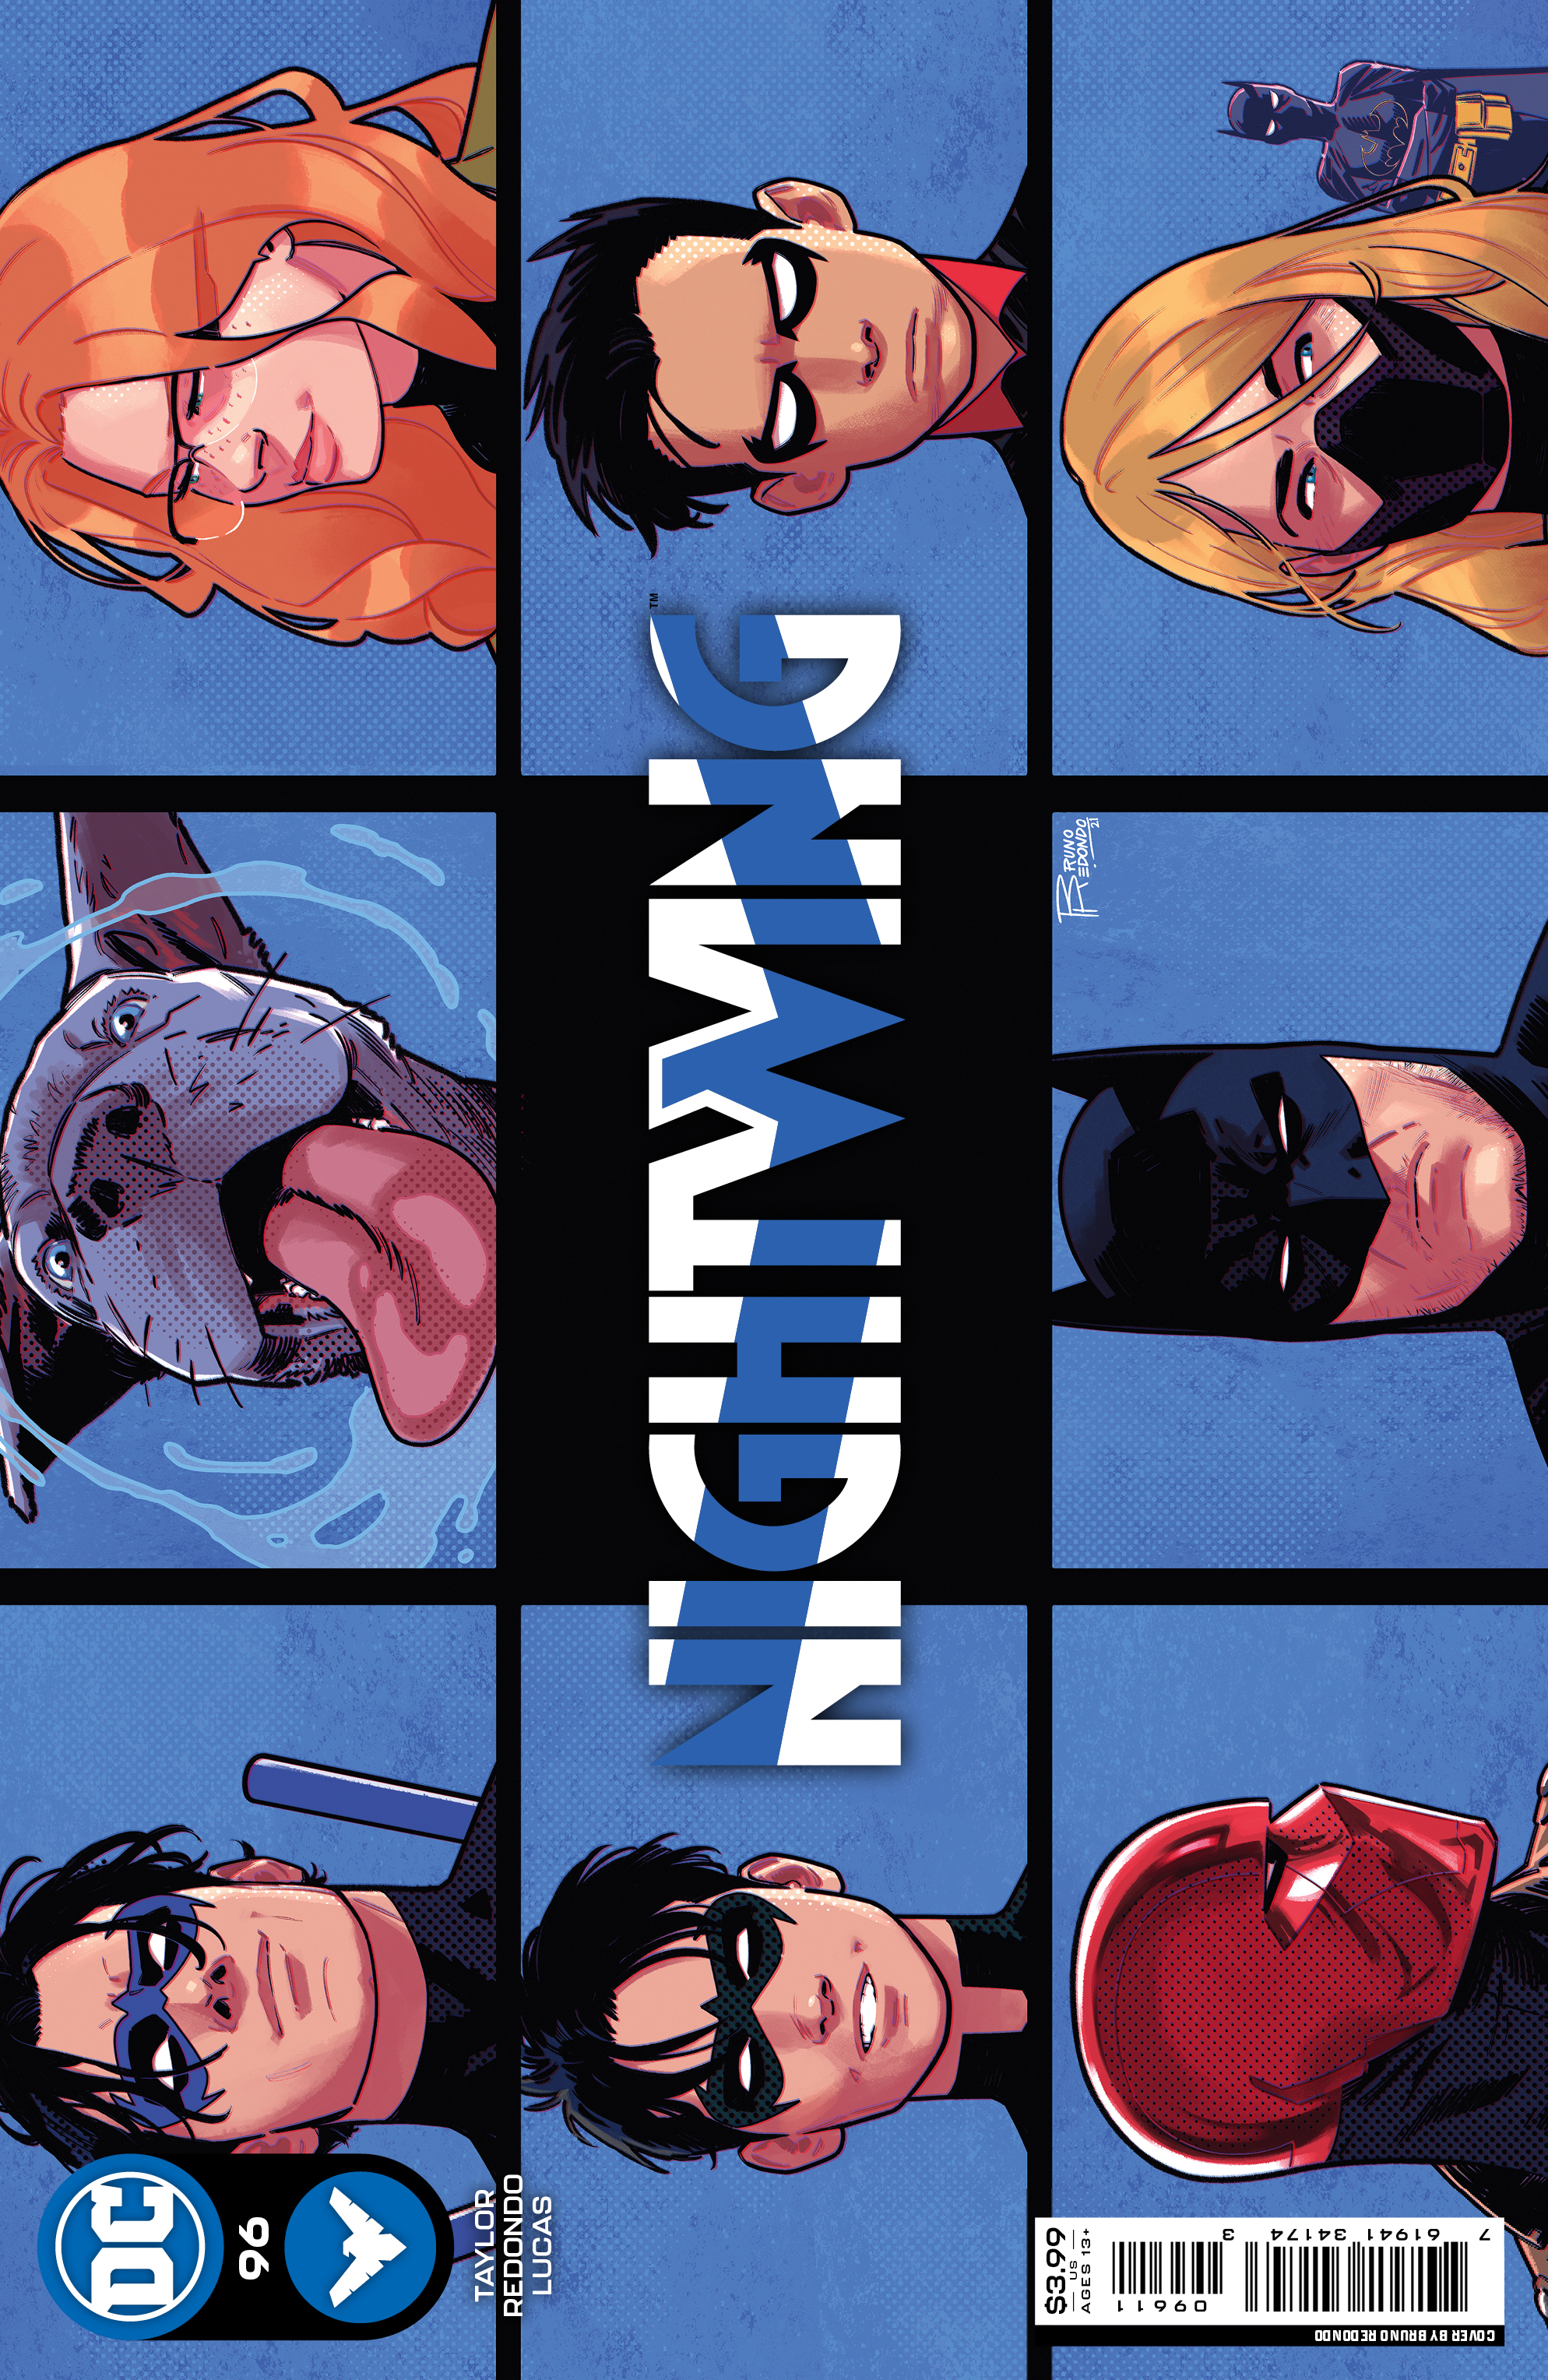 Nightwing #96 Cover A Bruno Redondo (2016)